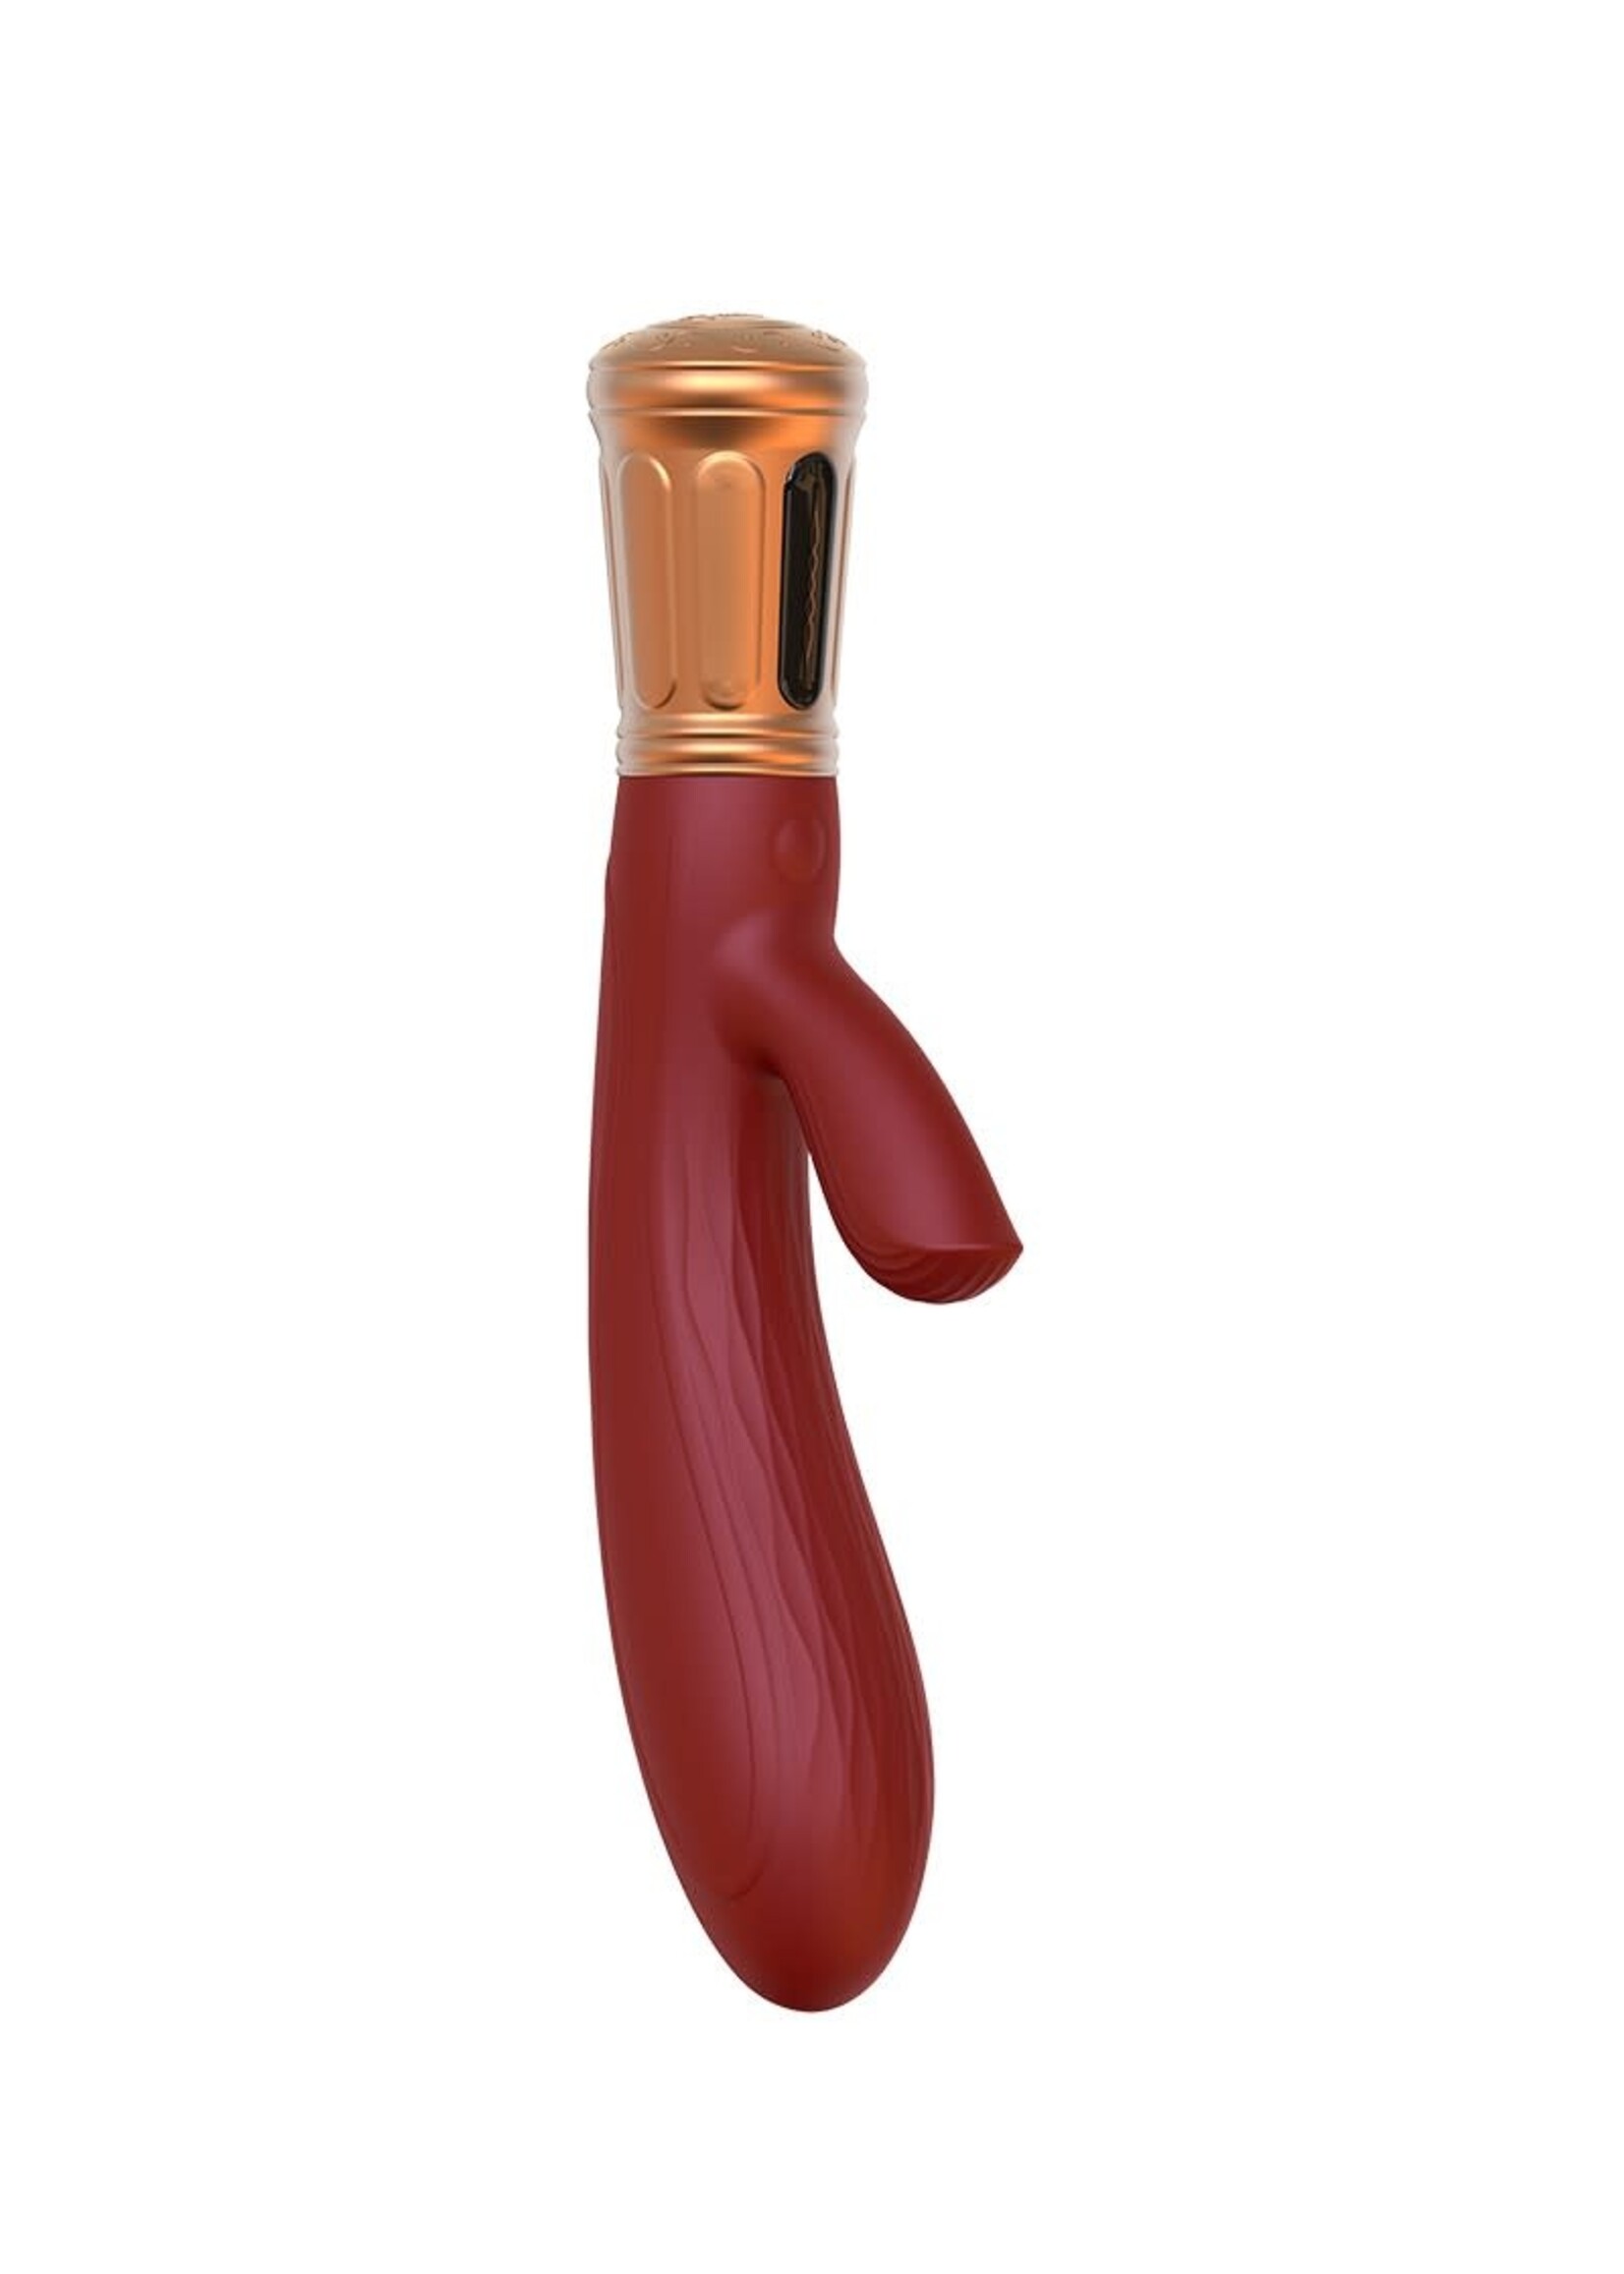 Mina rabbit vibrator - gold & wine red